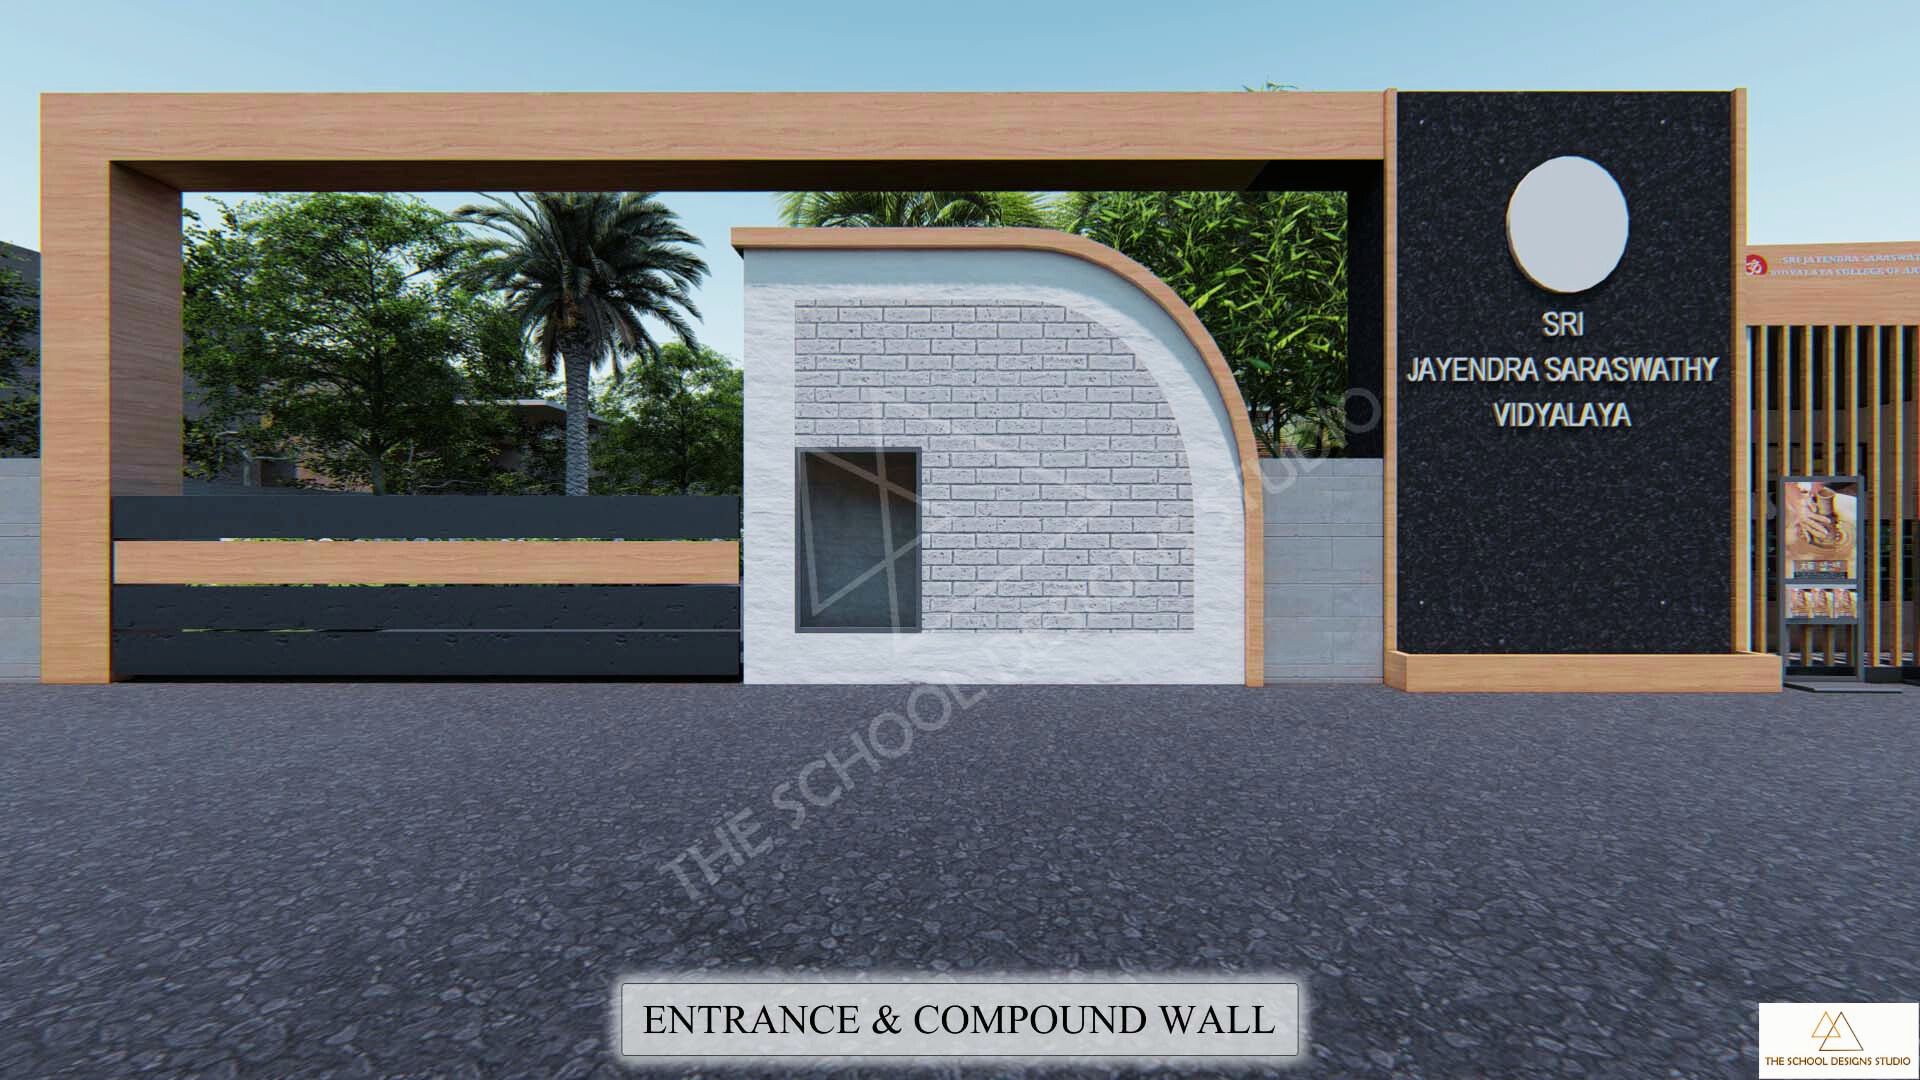 SRI JAYENDRA SARASWATHY MAHA VIDYALAYA, Coimbatore, Tamilnadu. Designed by The School Designs Studio (India's top architects for College Building Design)- Entrance and Compound Wall